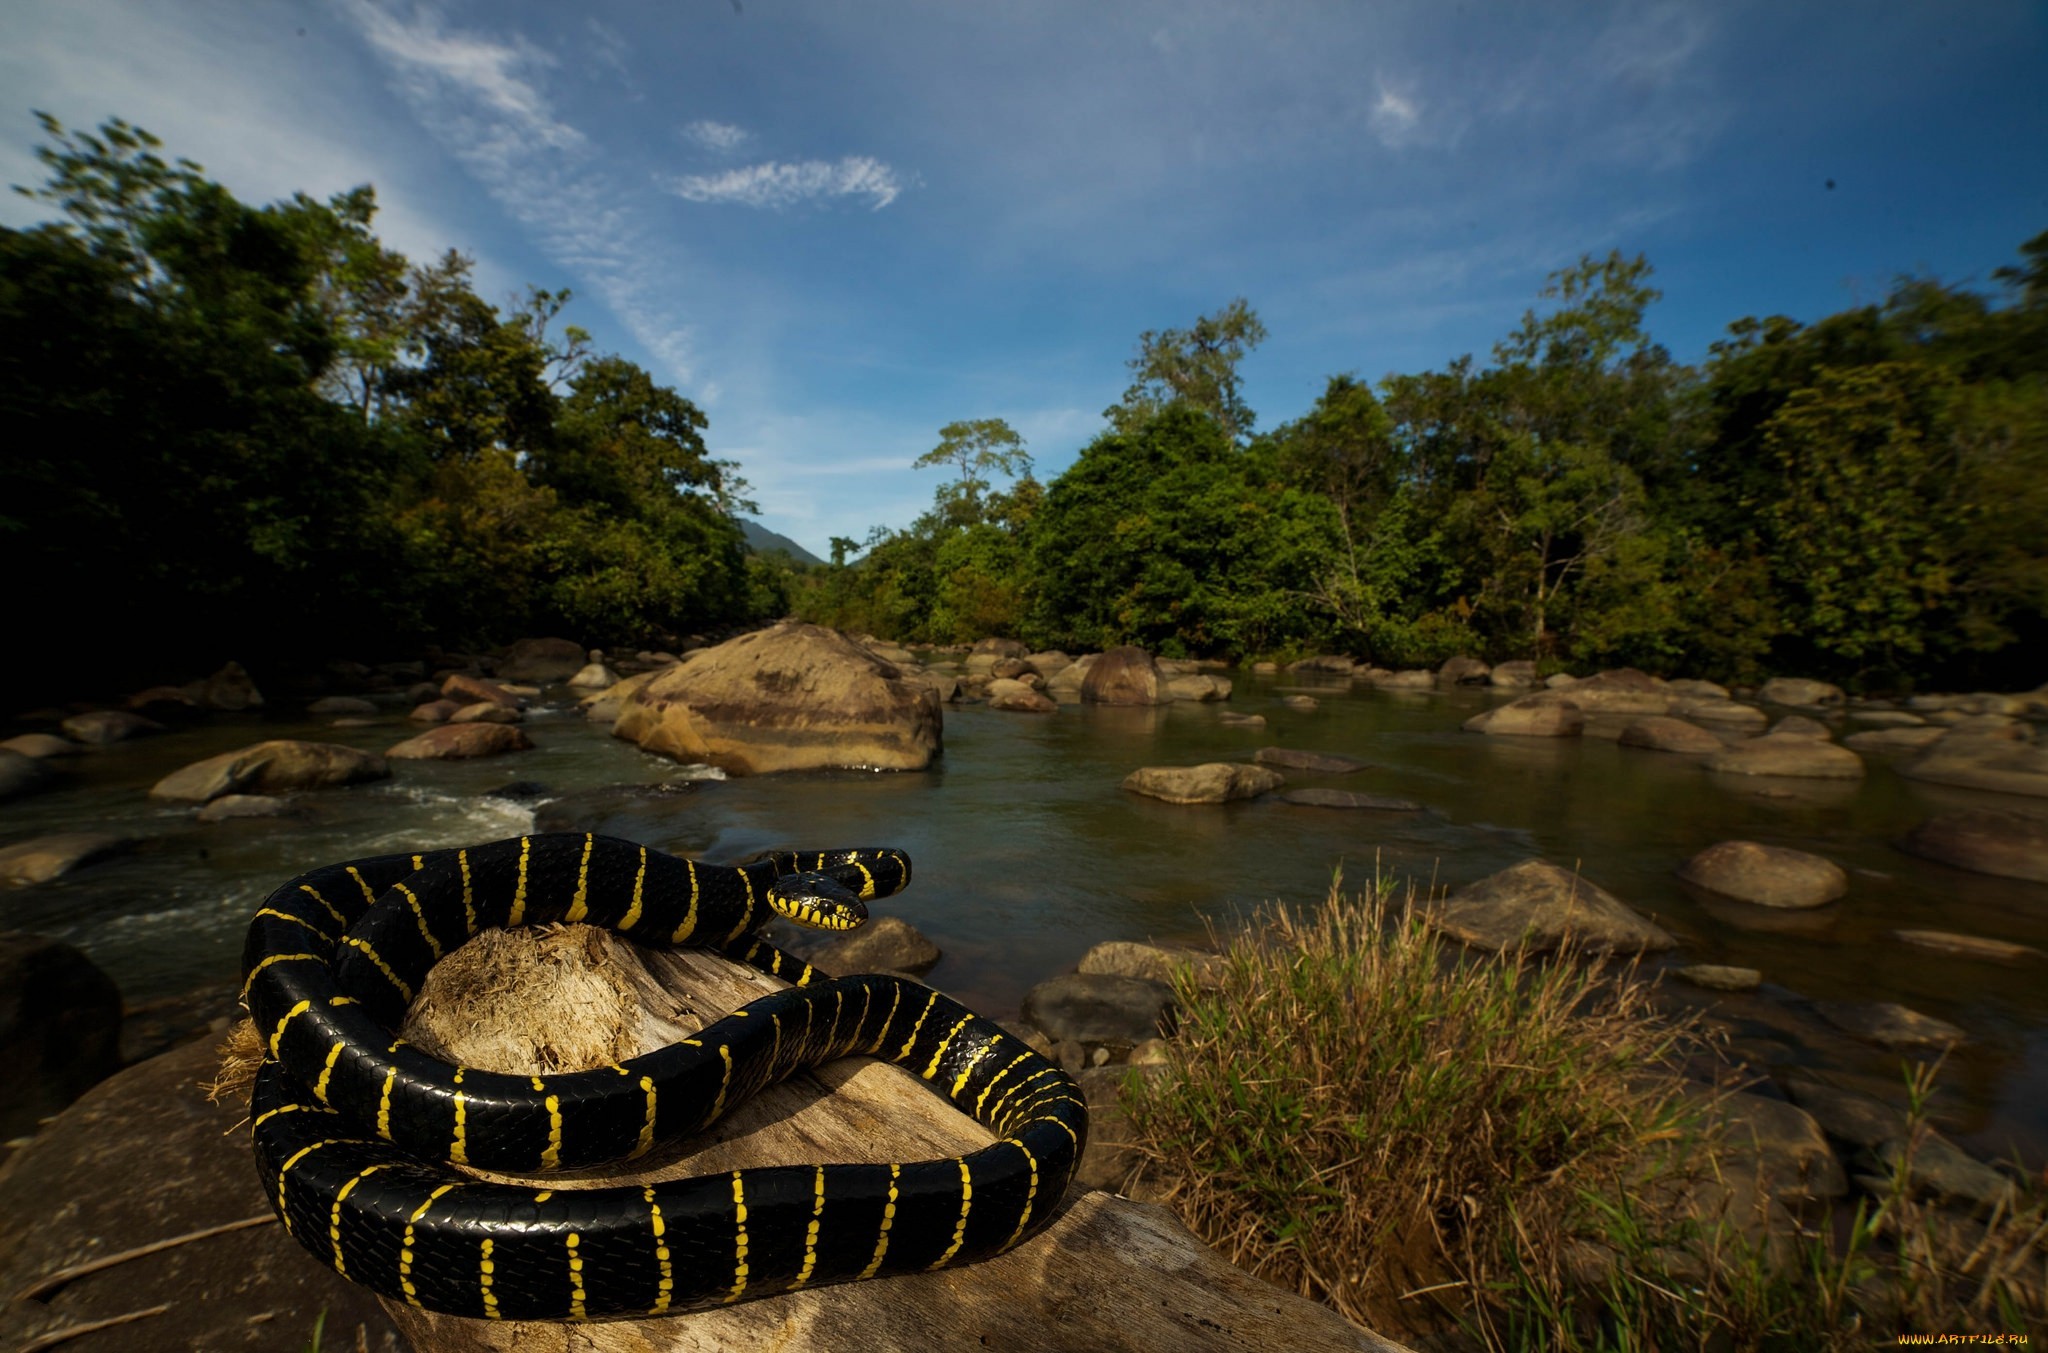 Змеи в тропическом лесу. Река Амазонка змея Анаконда. Анаконда в джунглях. Питон ТИТАНОБОА. Анаконда в джунглях амазонки.